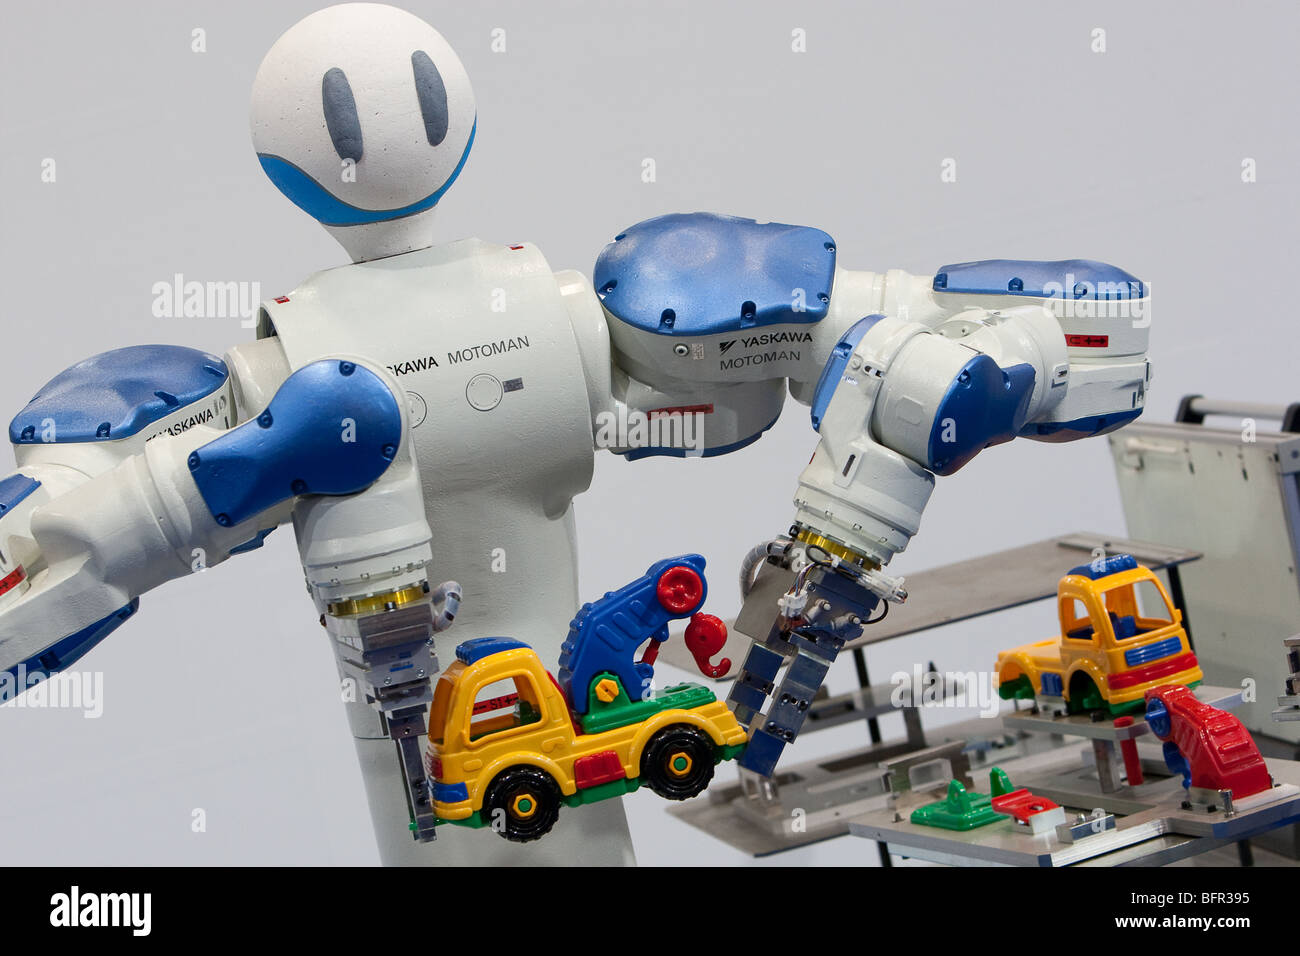 Motoman' robots produced by Yaskawa, at the International Robot Exhibition  2009, in Tokyo, Japan Stock Photo - Alamy